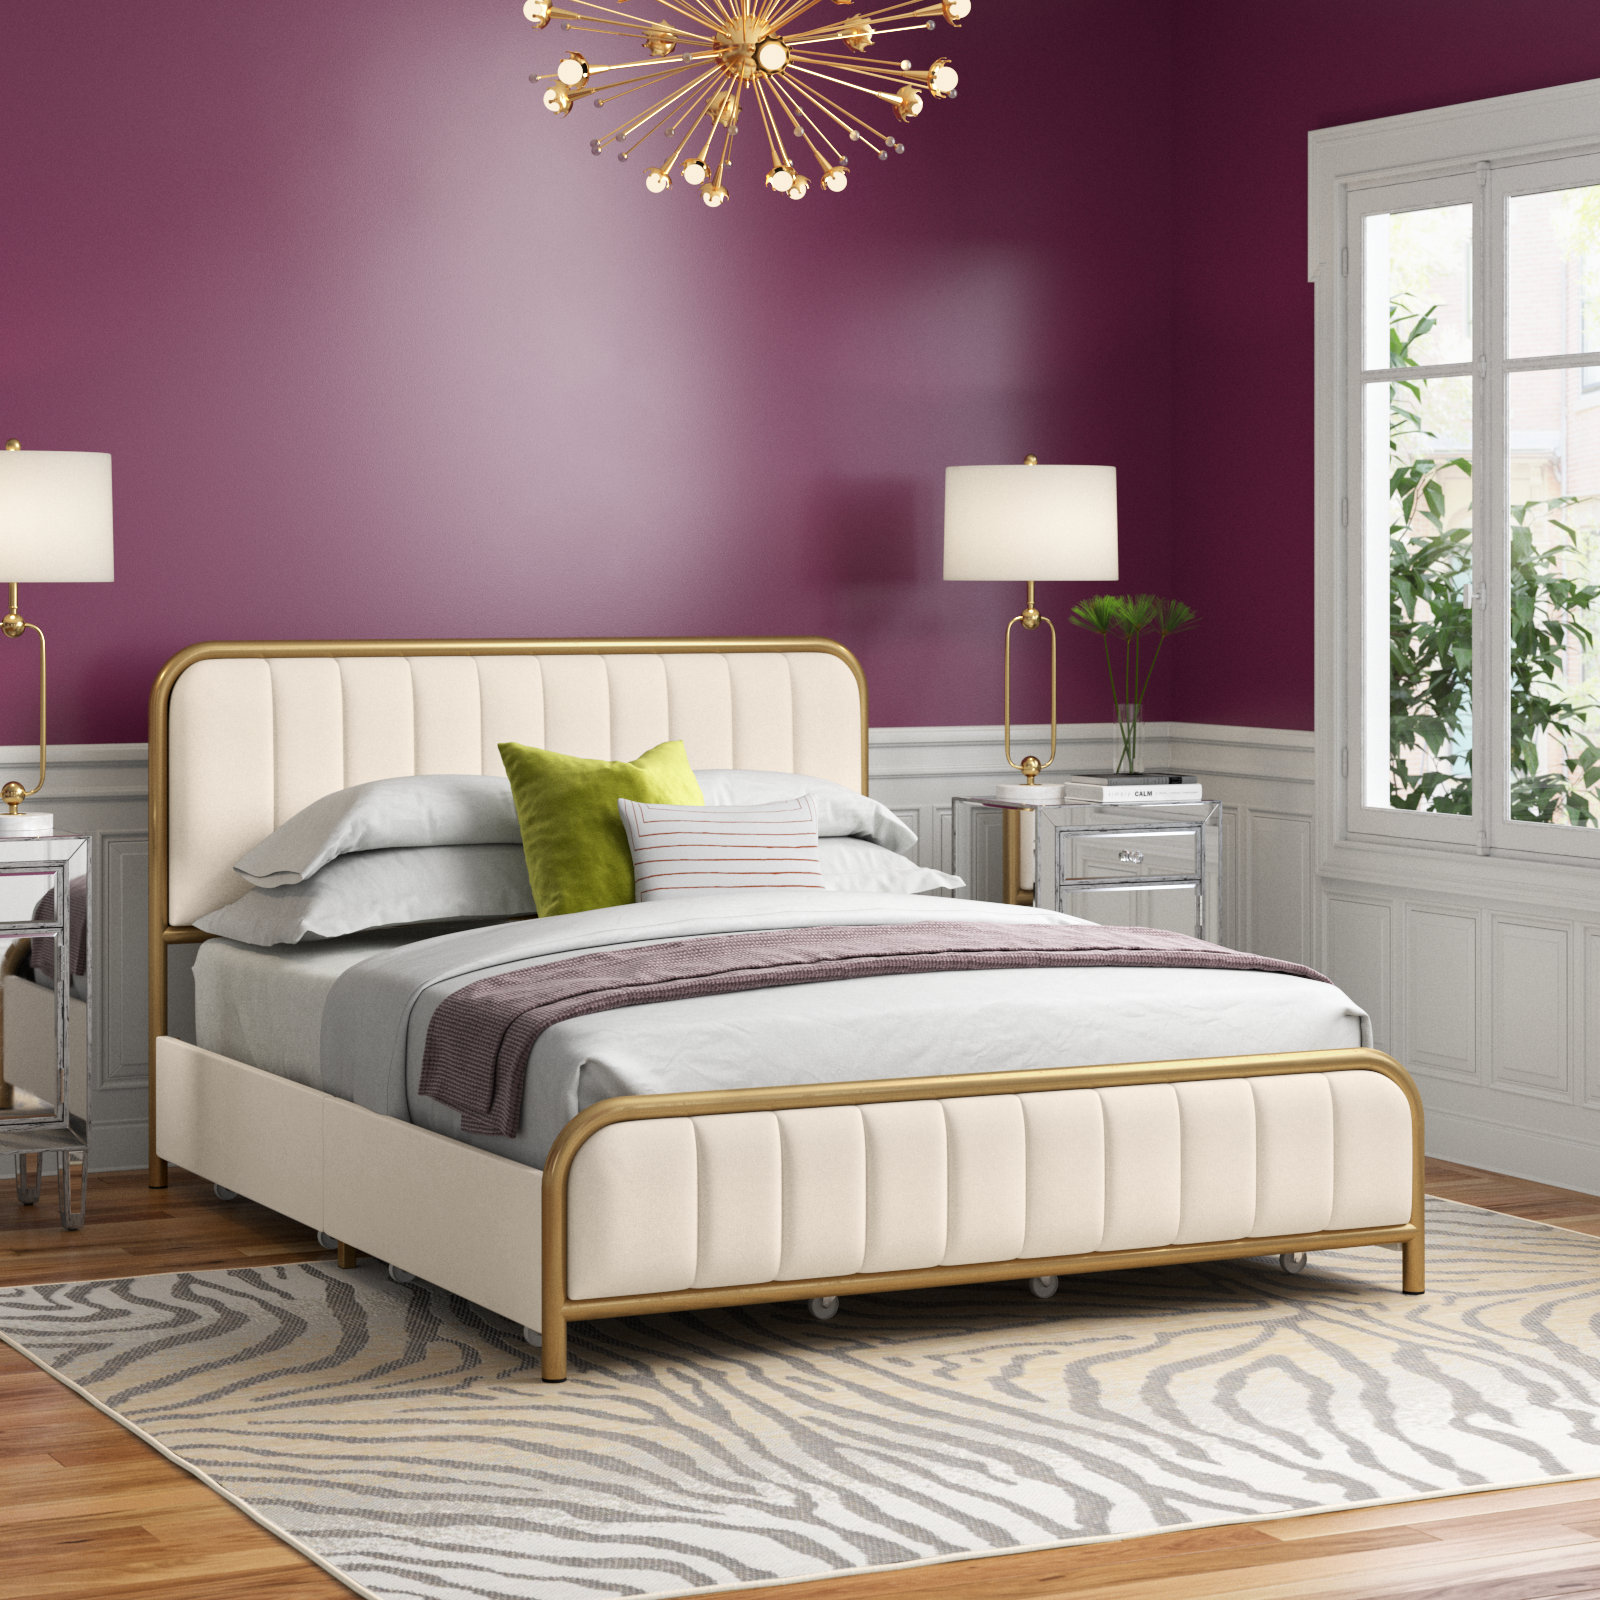 Batchelor Velvet Upholstered Platform Bed Frame with 4 Drawers Willa Arlo Interiors Size: Queen, Color: Light Beige